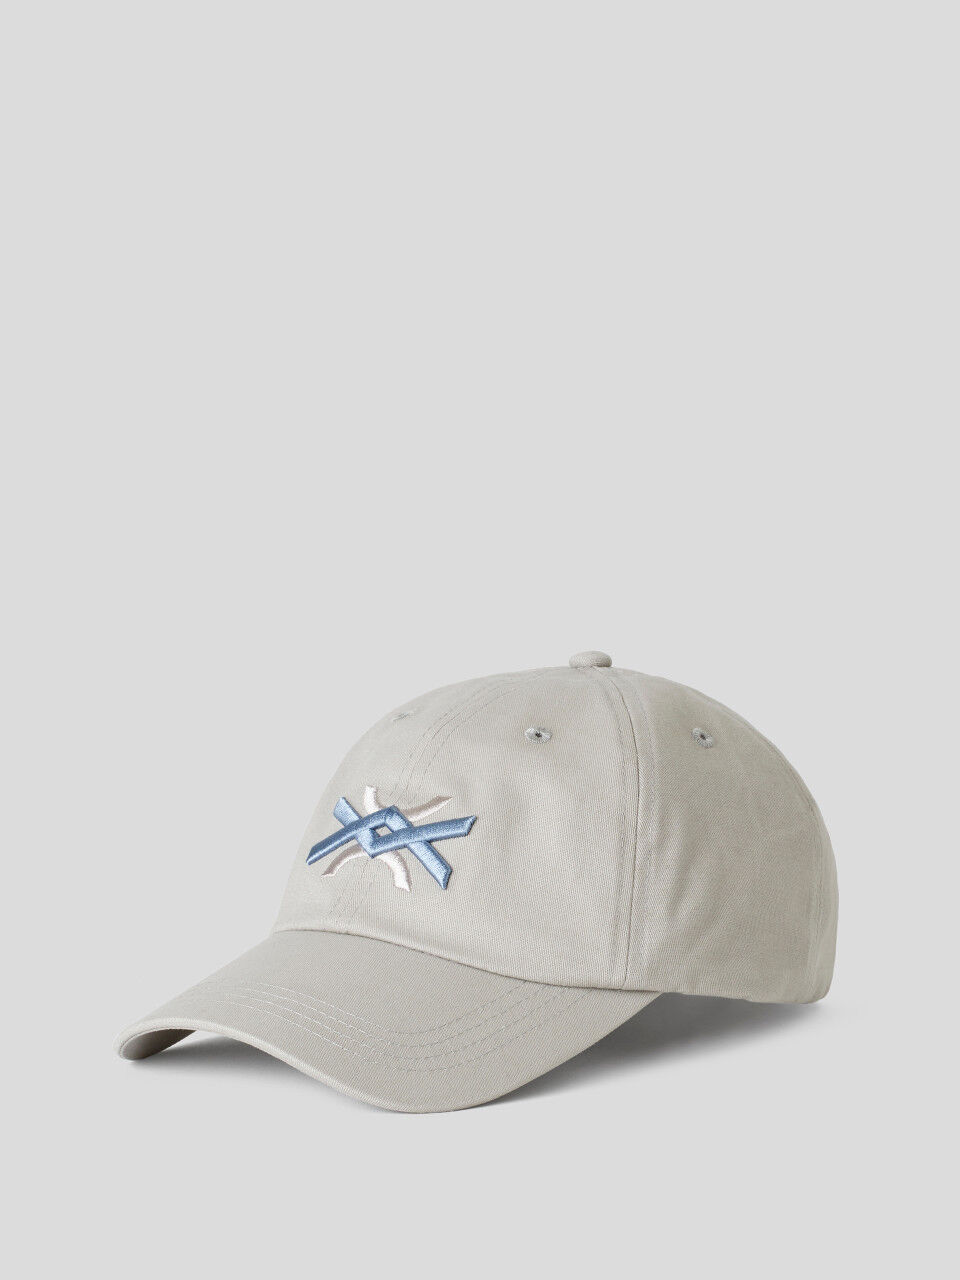 Light gray baseball cap